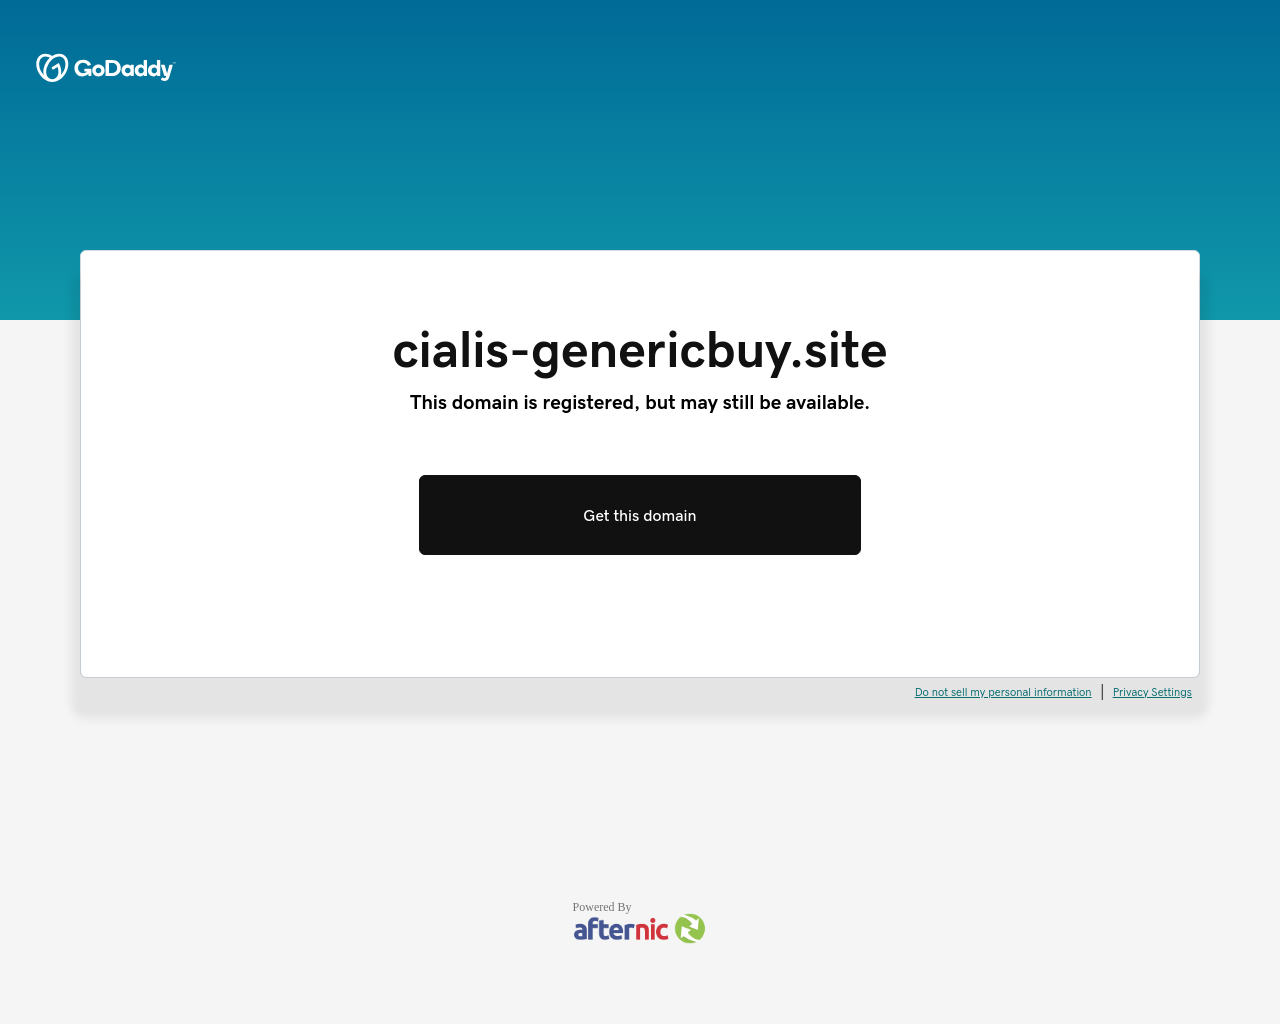 cialis-genericbuy.site